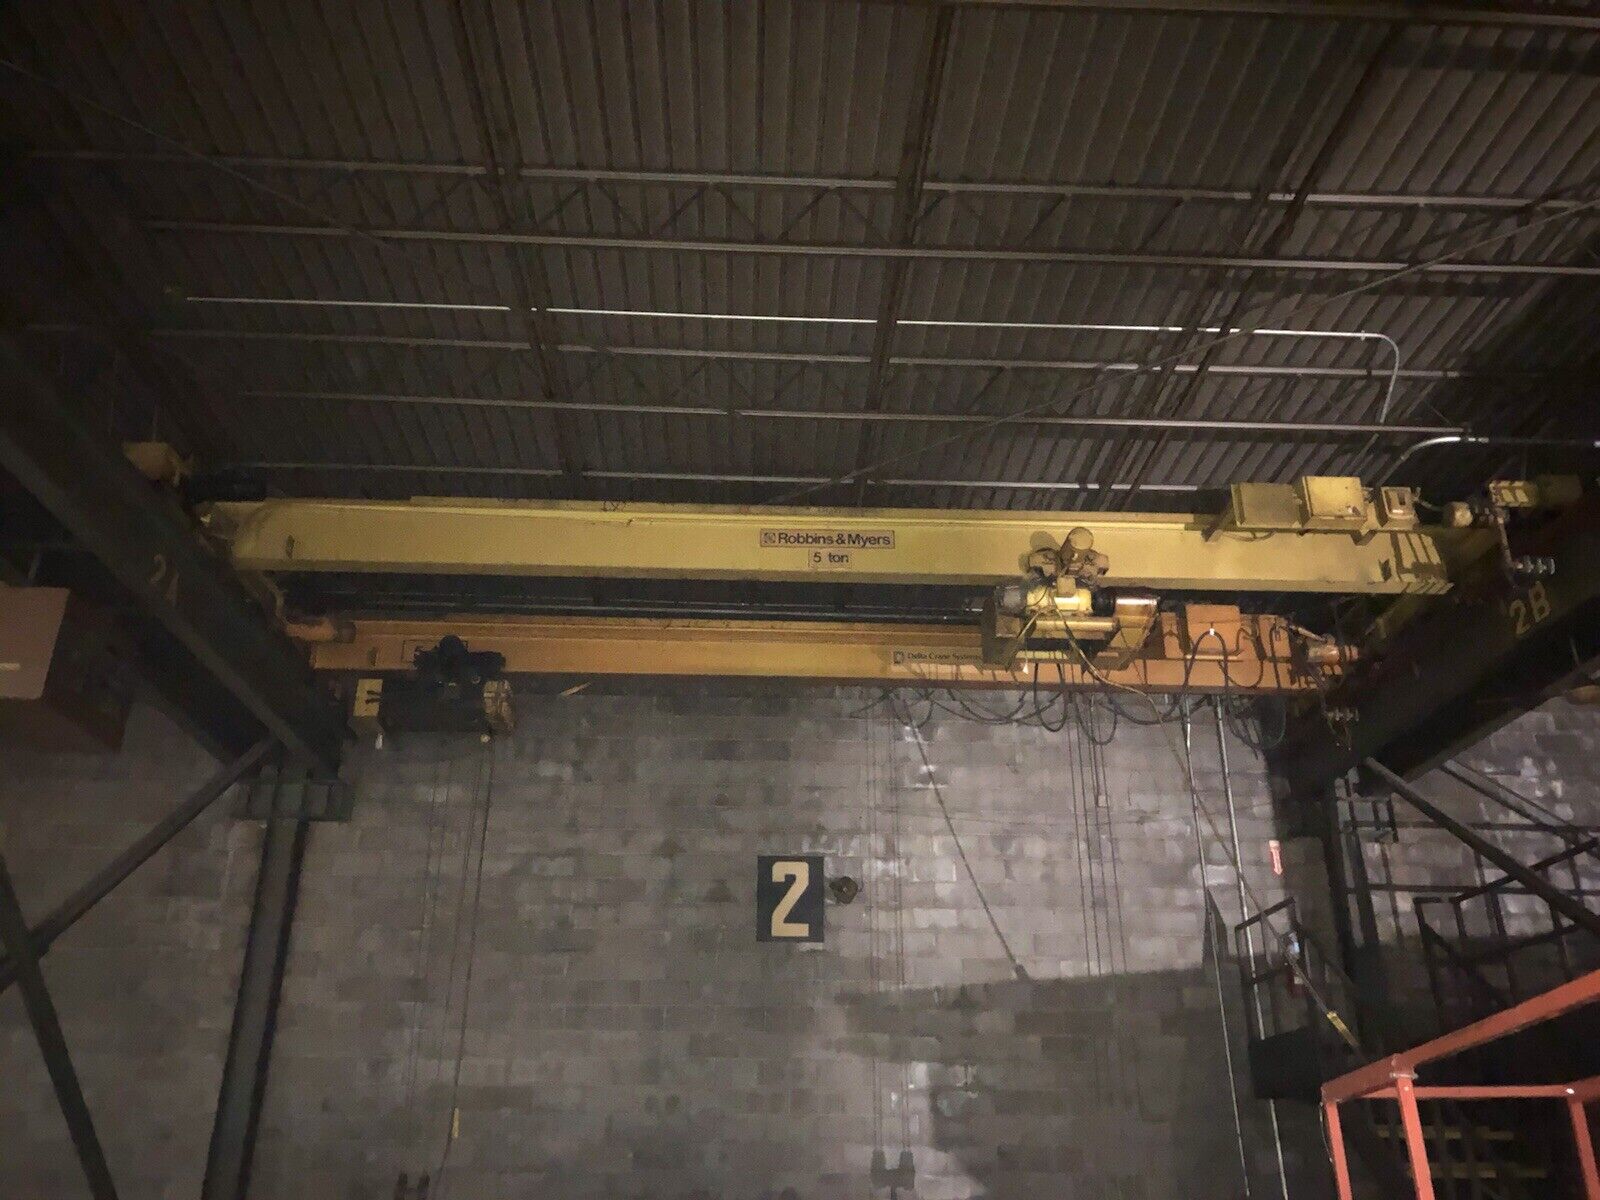 25’ span 5 ton overhead Crane